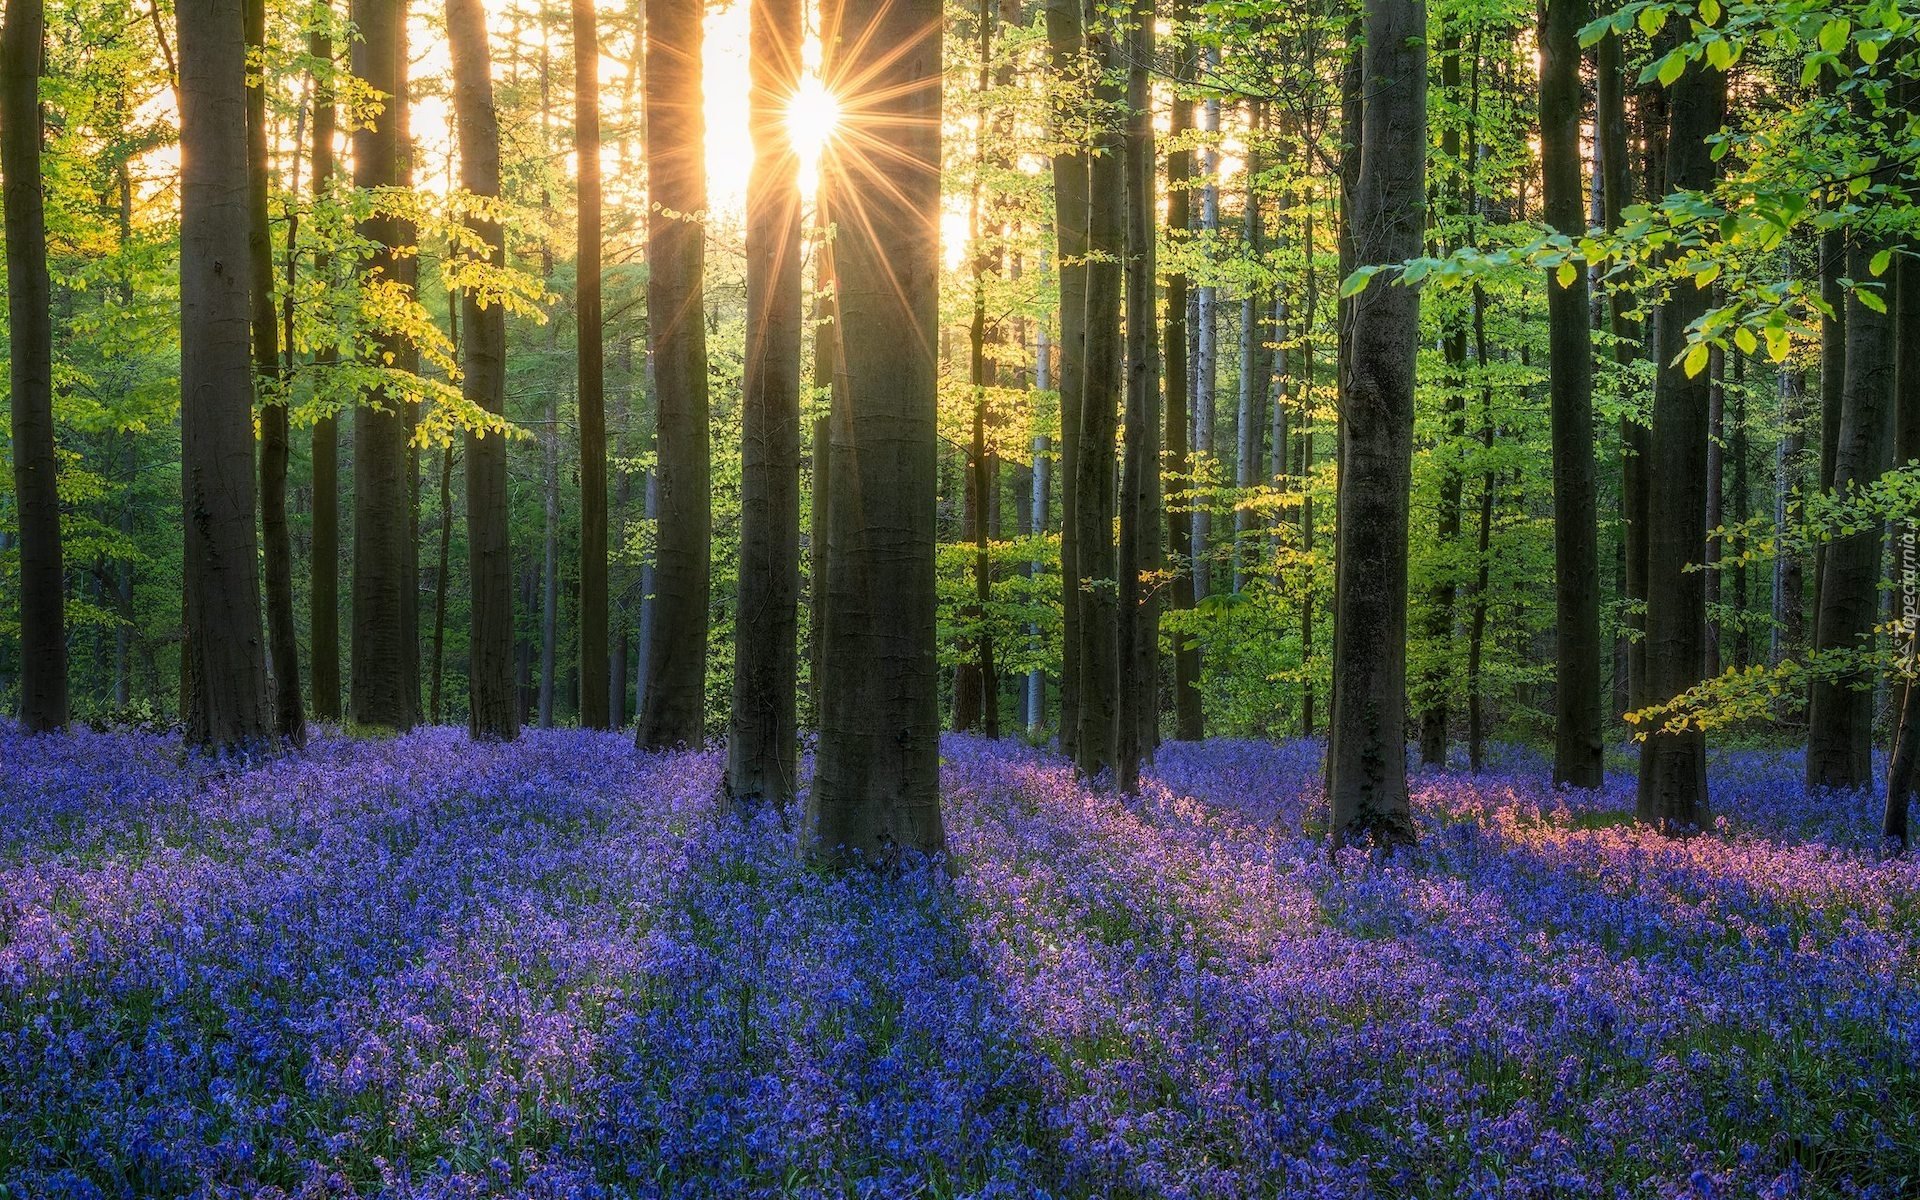 Пр е красный. Лес Халлербос Бельгия. Bluebell Forest Бельгия. Природа. Красота леса.